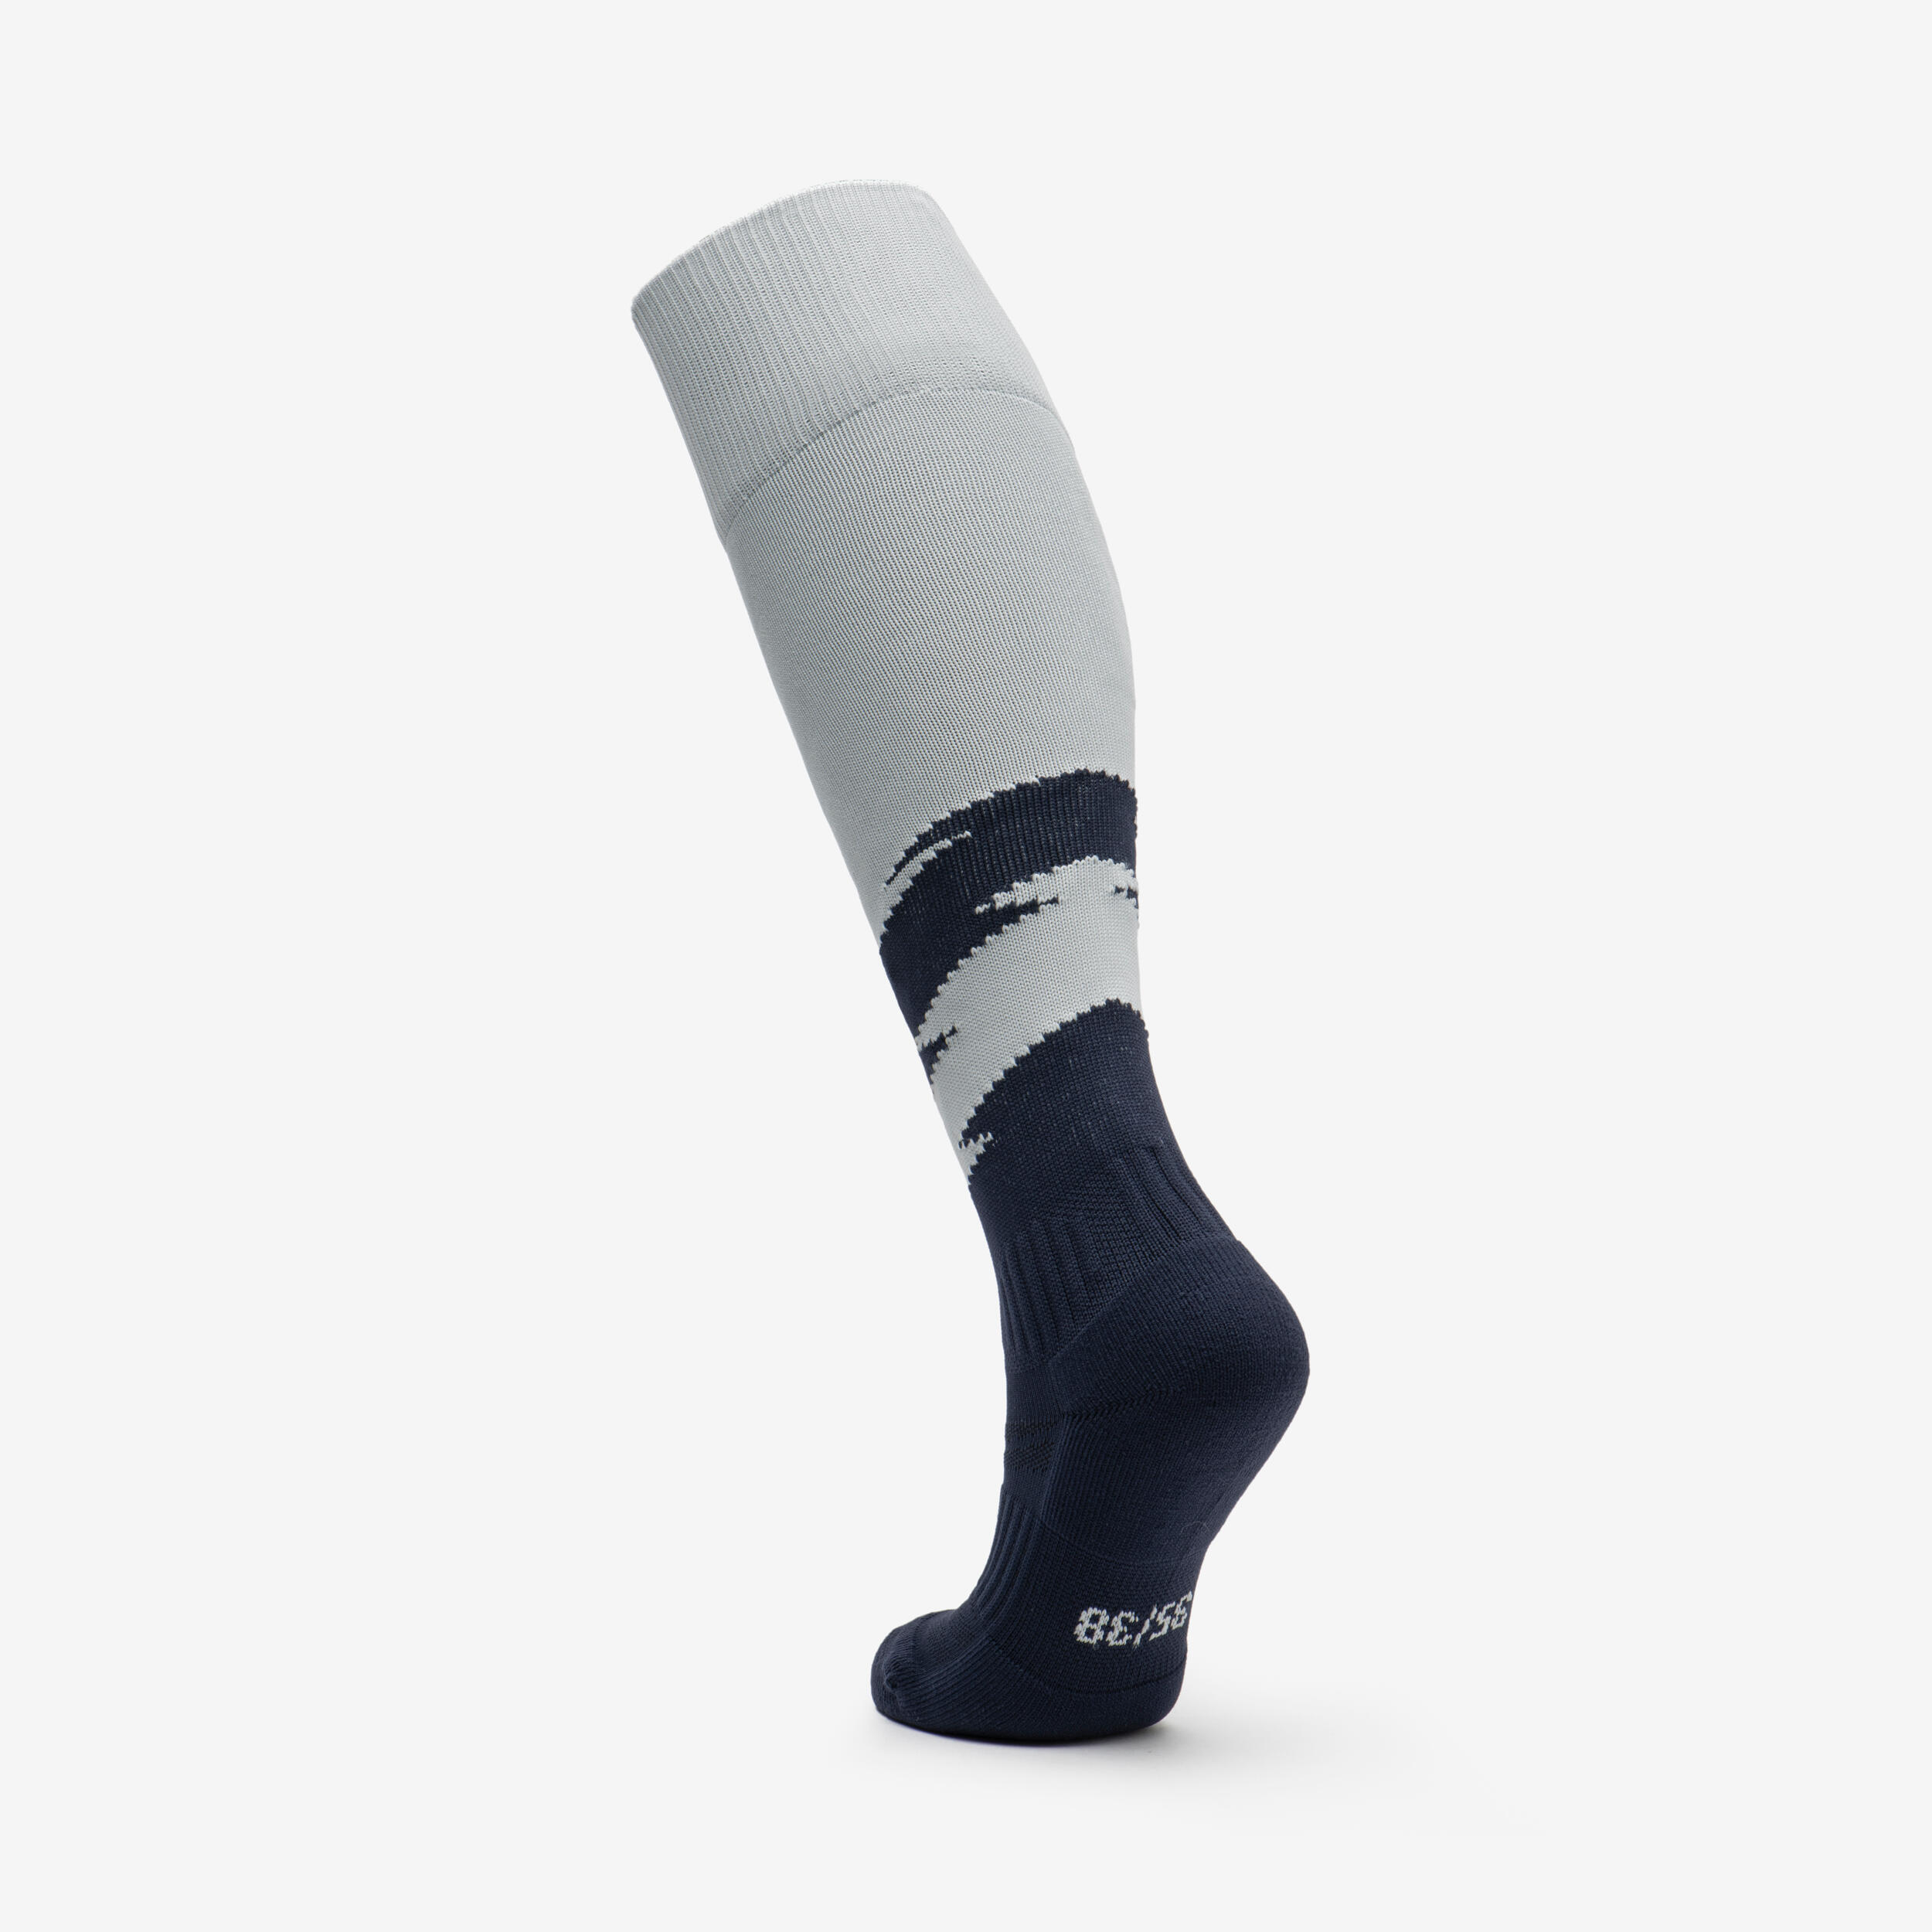 Kids' Football Socks - Grey/Navy 2/4